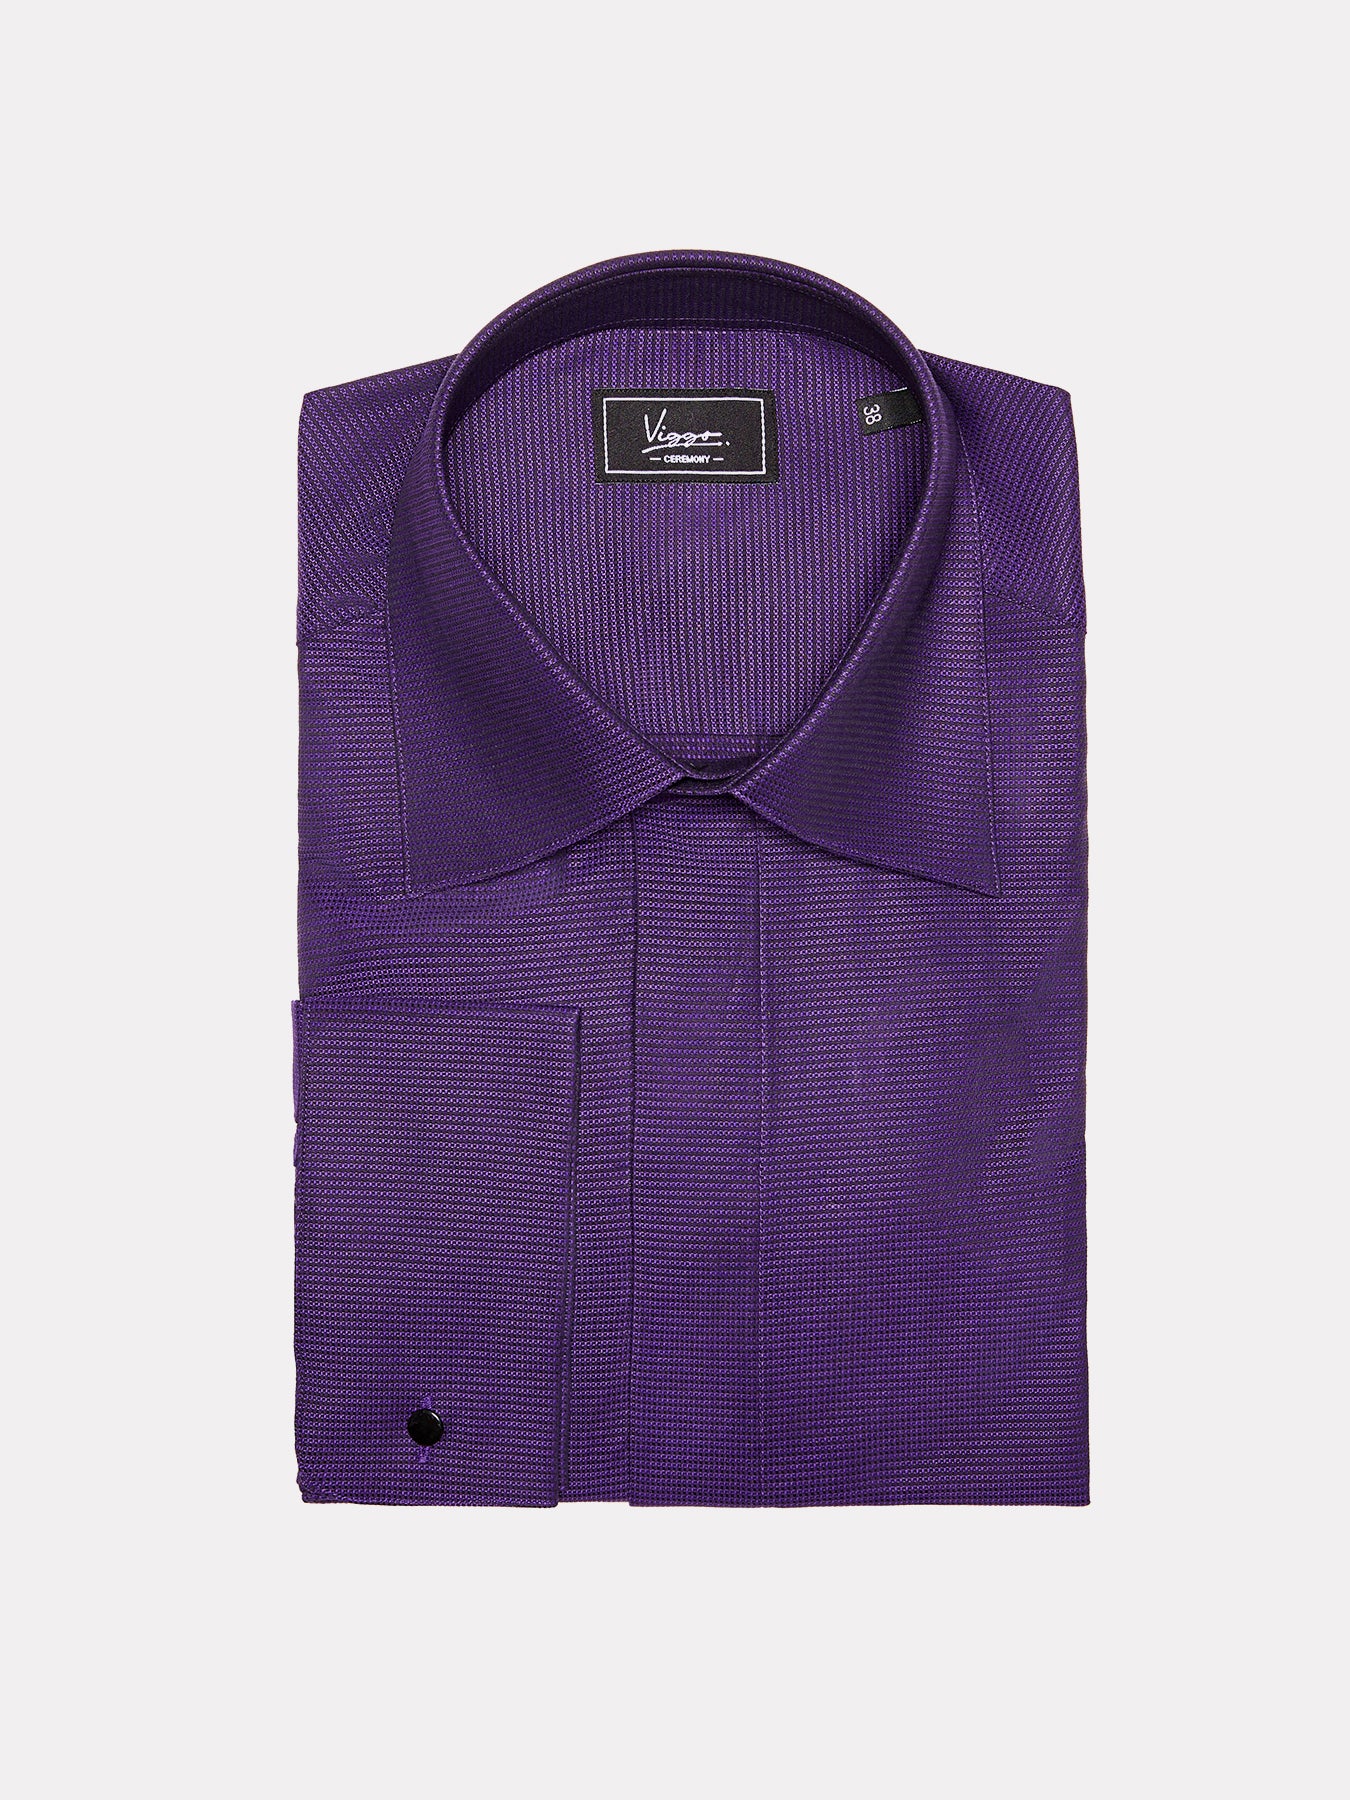 Black textured shirt with purple stripes, hidden buttons